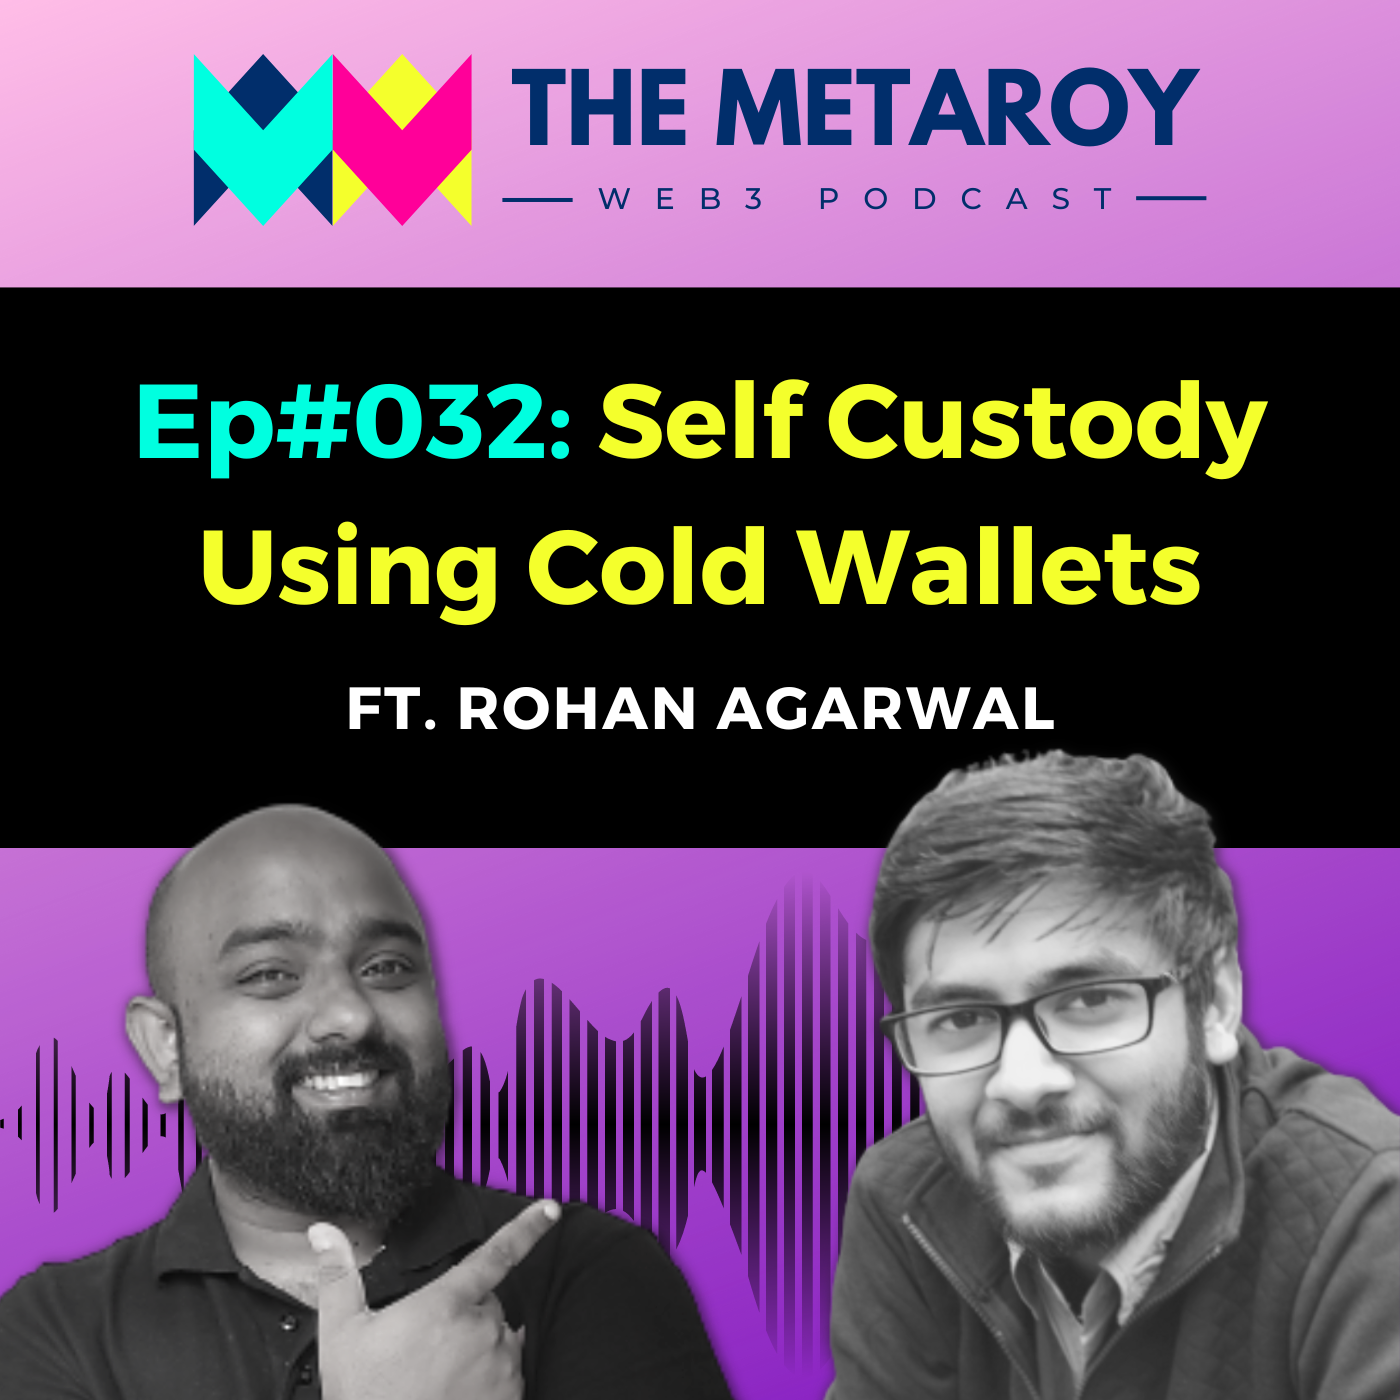 Rohan Agarwal: How to Take Self Custody of Your Crypto | Ep #032